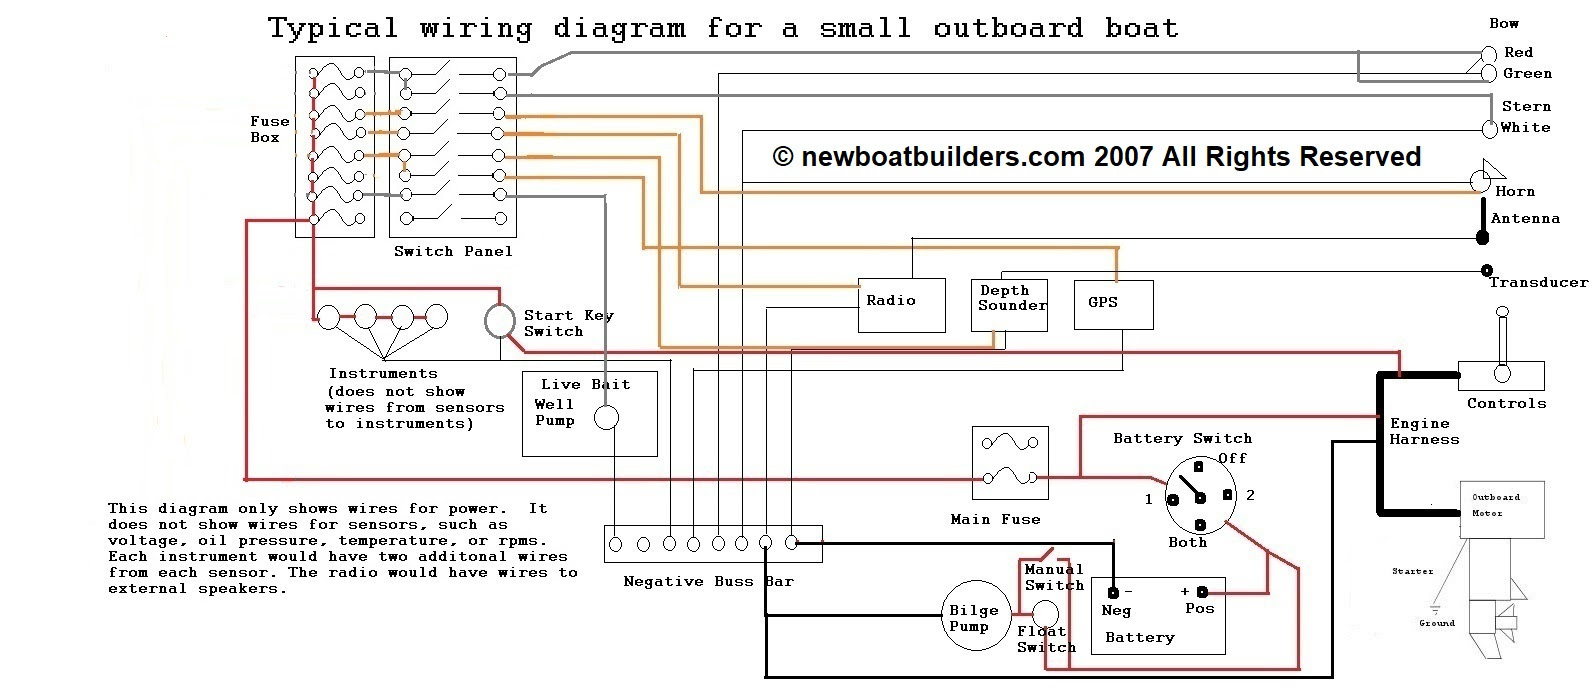 3 Wire Submersible Pump Wiring Diagram - Diagram Stream